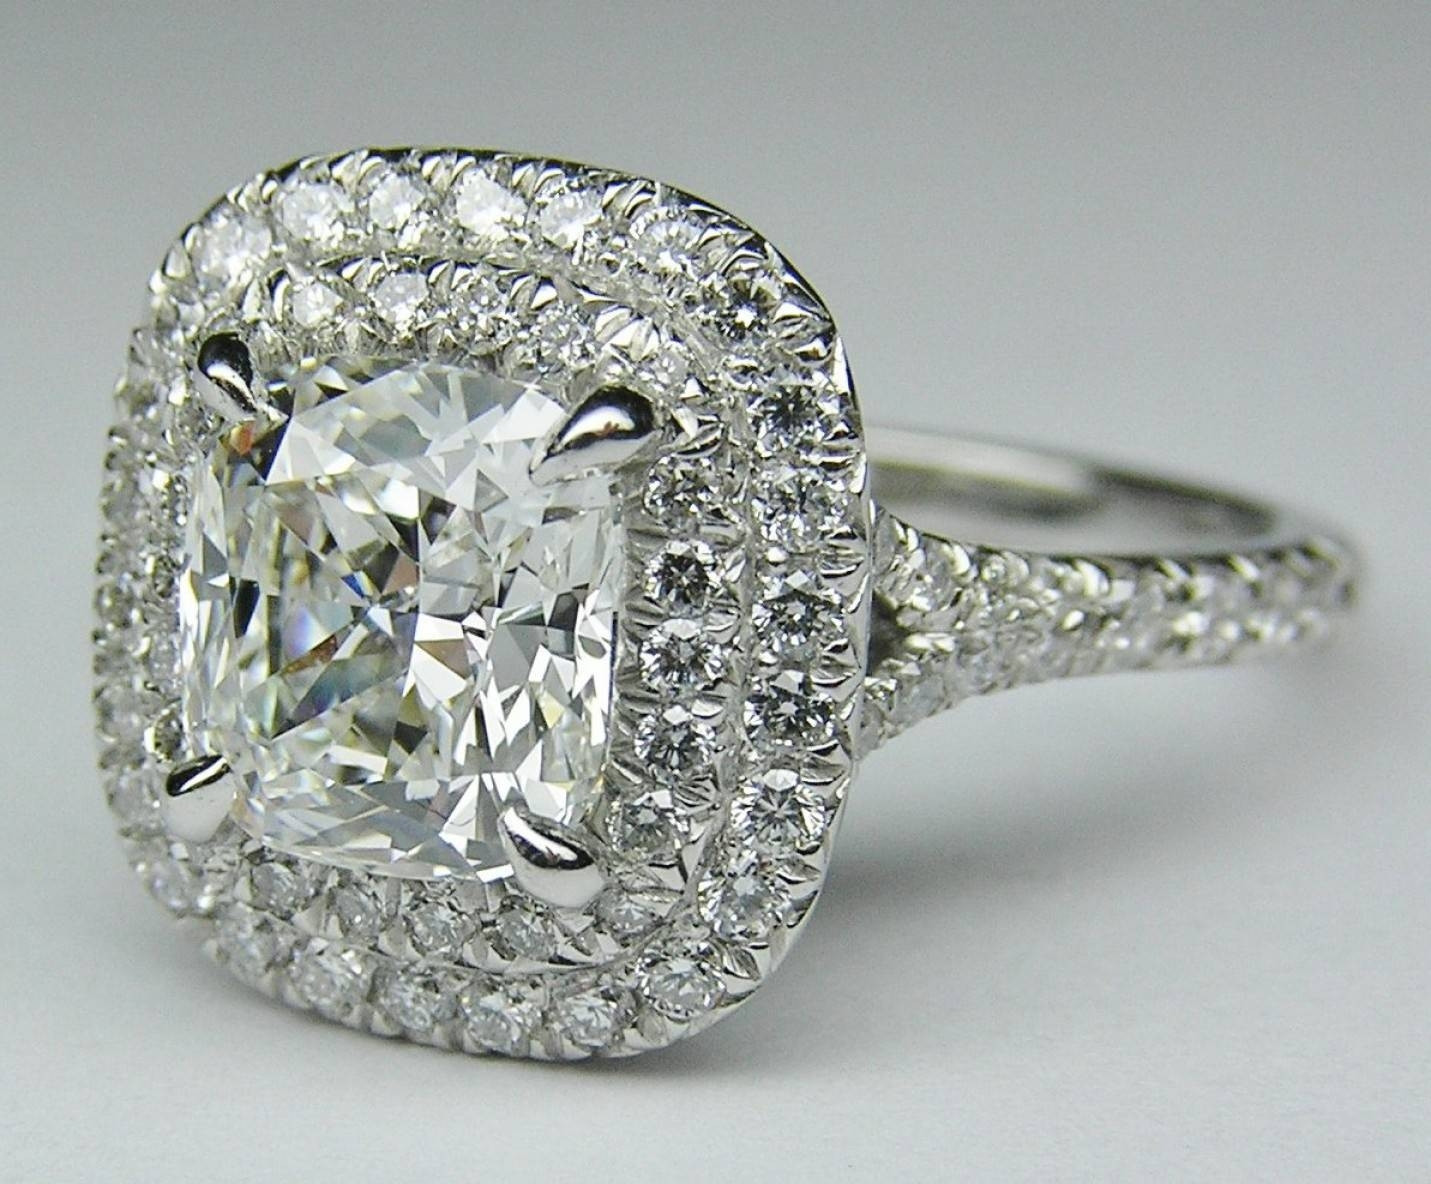 Million Dollar Wedding Rings
 2020 Popular 1 Million Dollar Engagement Rings